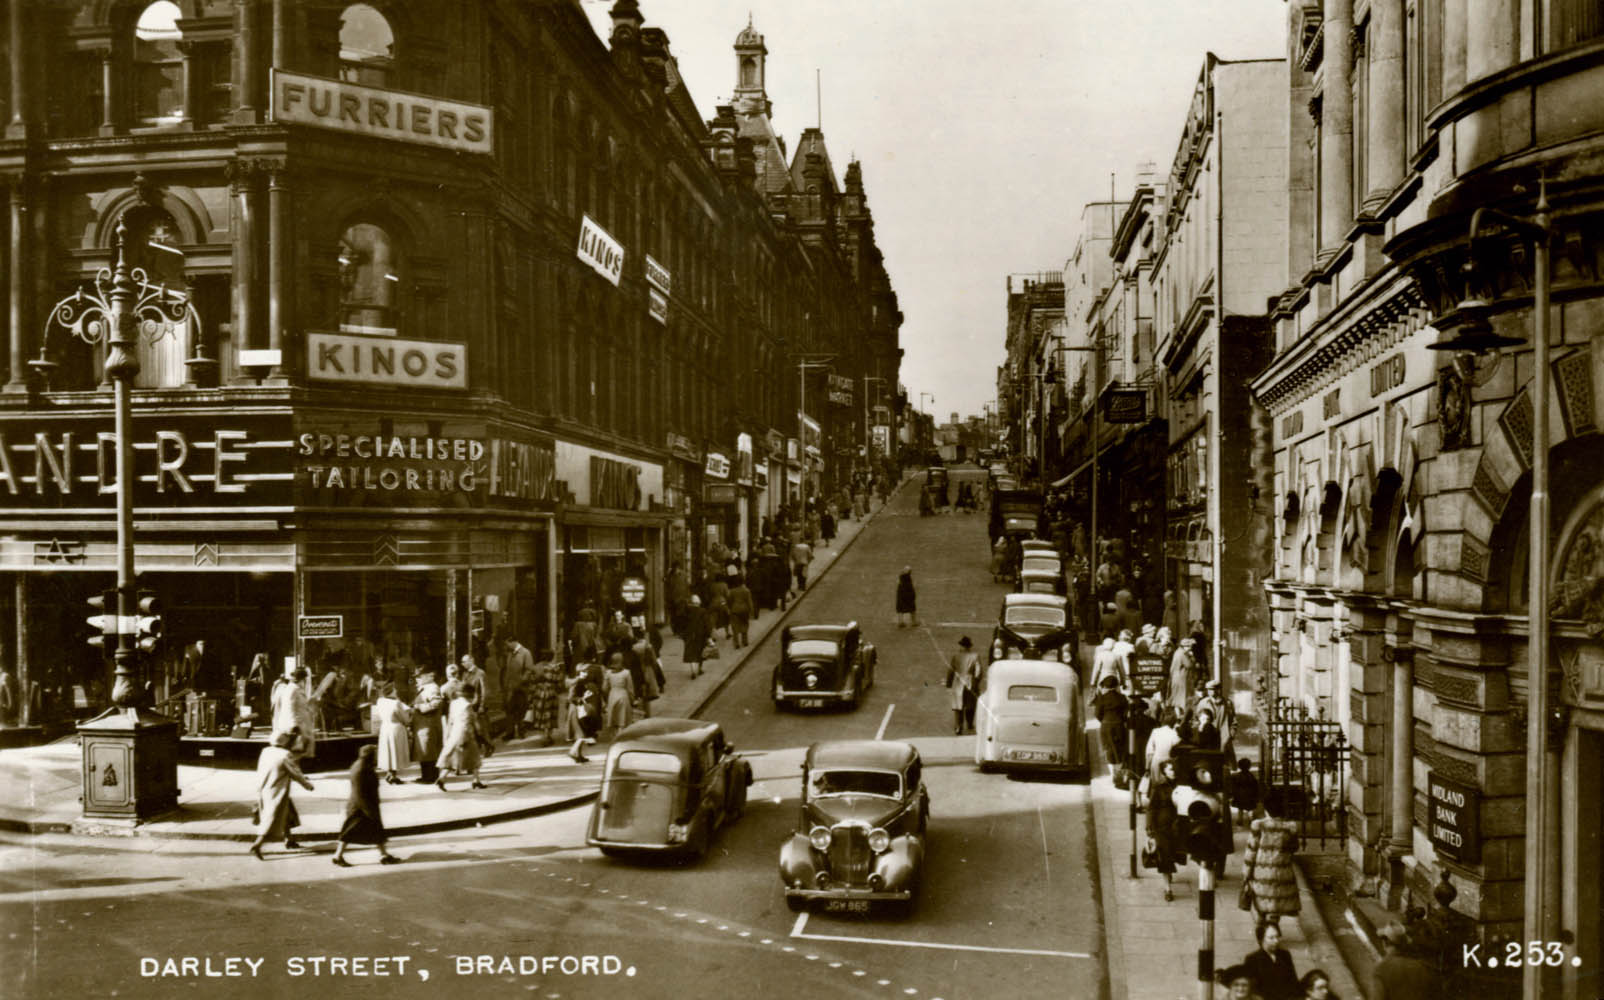 'Darley Street, Bradford,' by J Valentine & Co, 1950 (St Andrews JV-K-253)